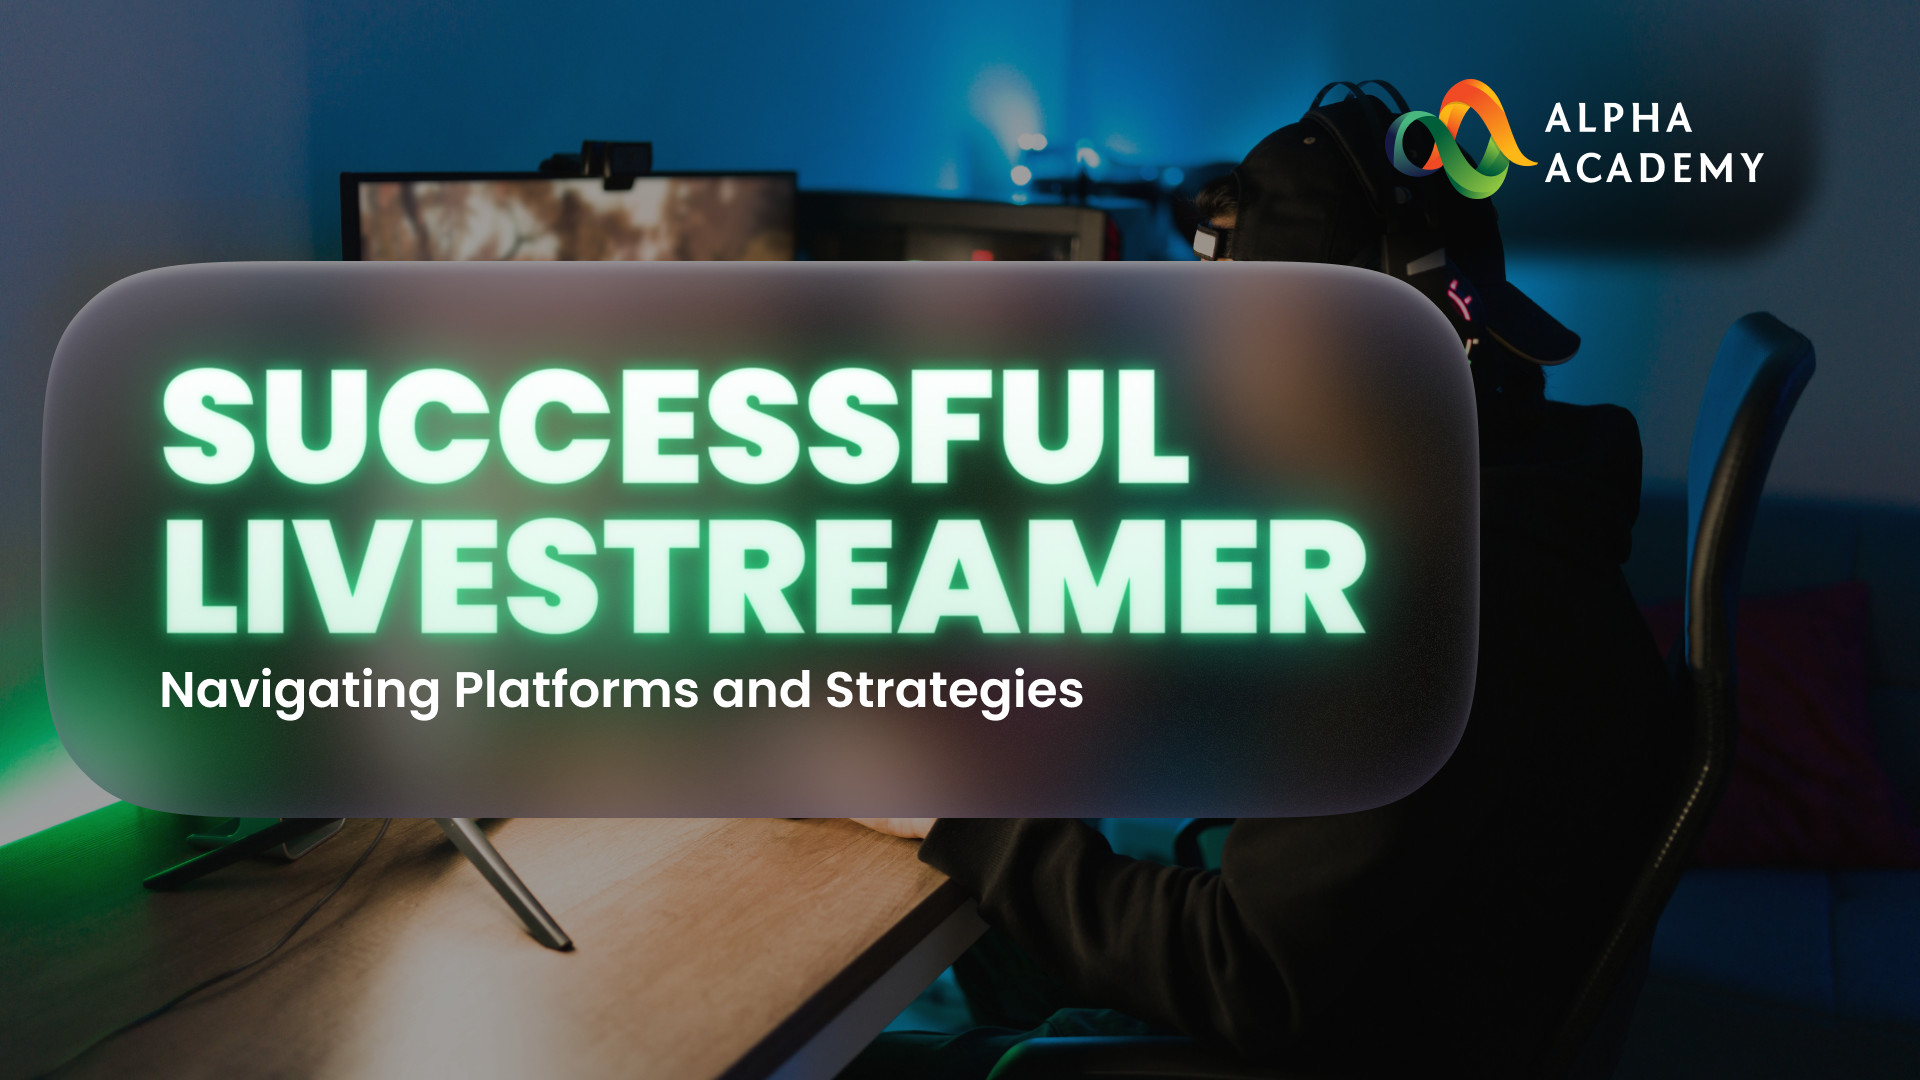 Successful Live streamer: Navigating Platforms and Strategies eLearning Bundle Alpha Academy Code $11.28